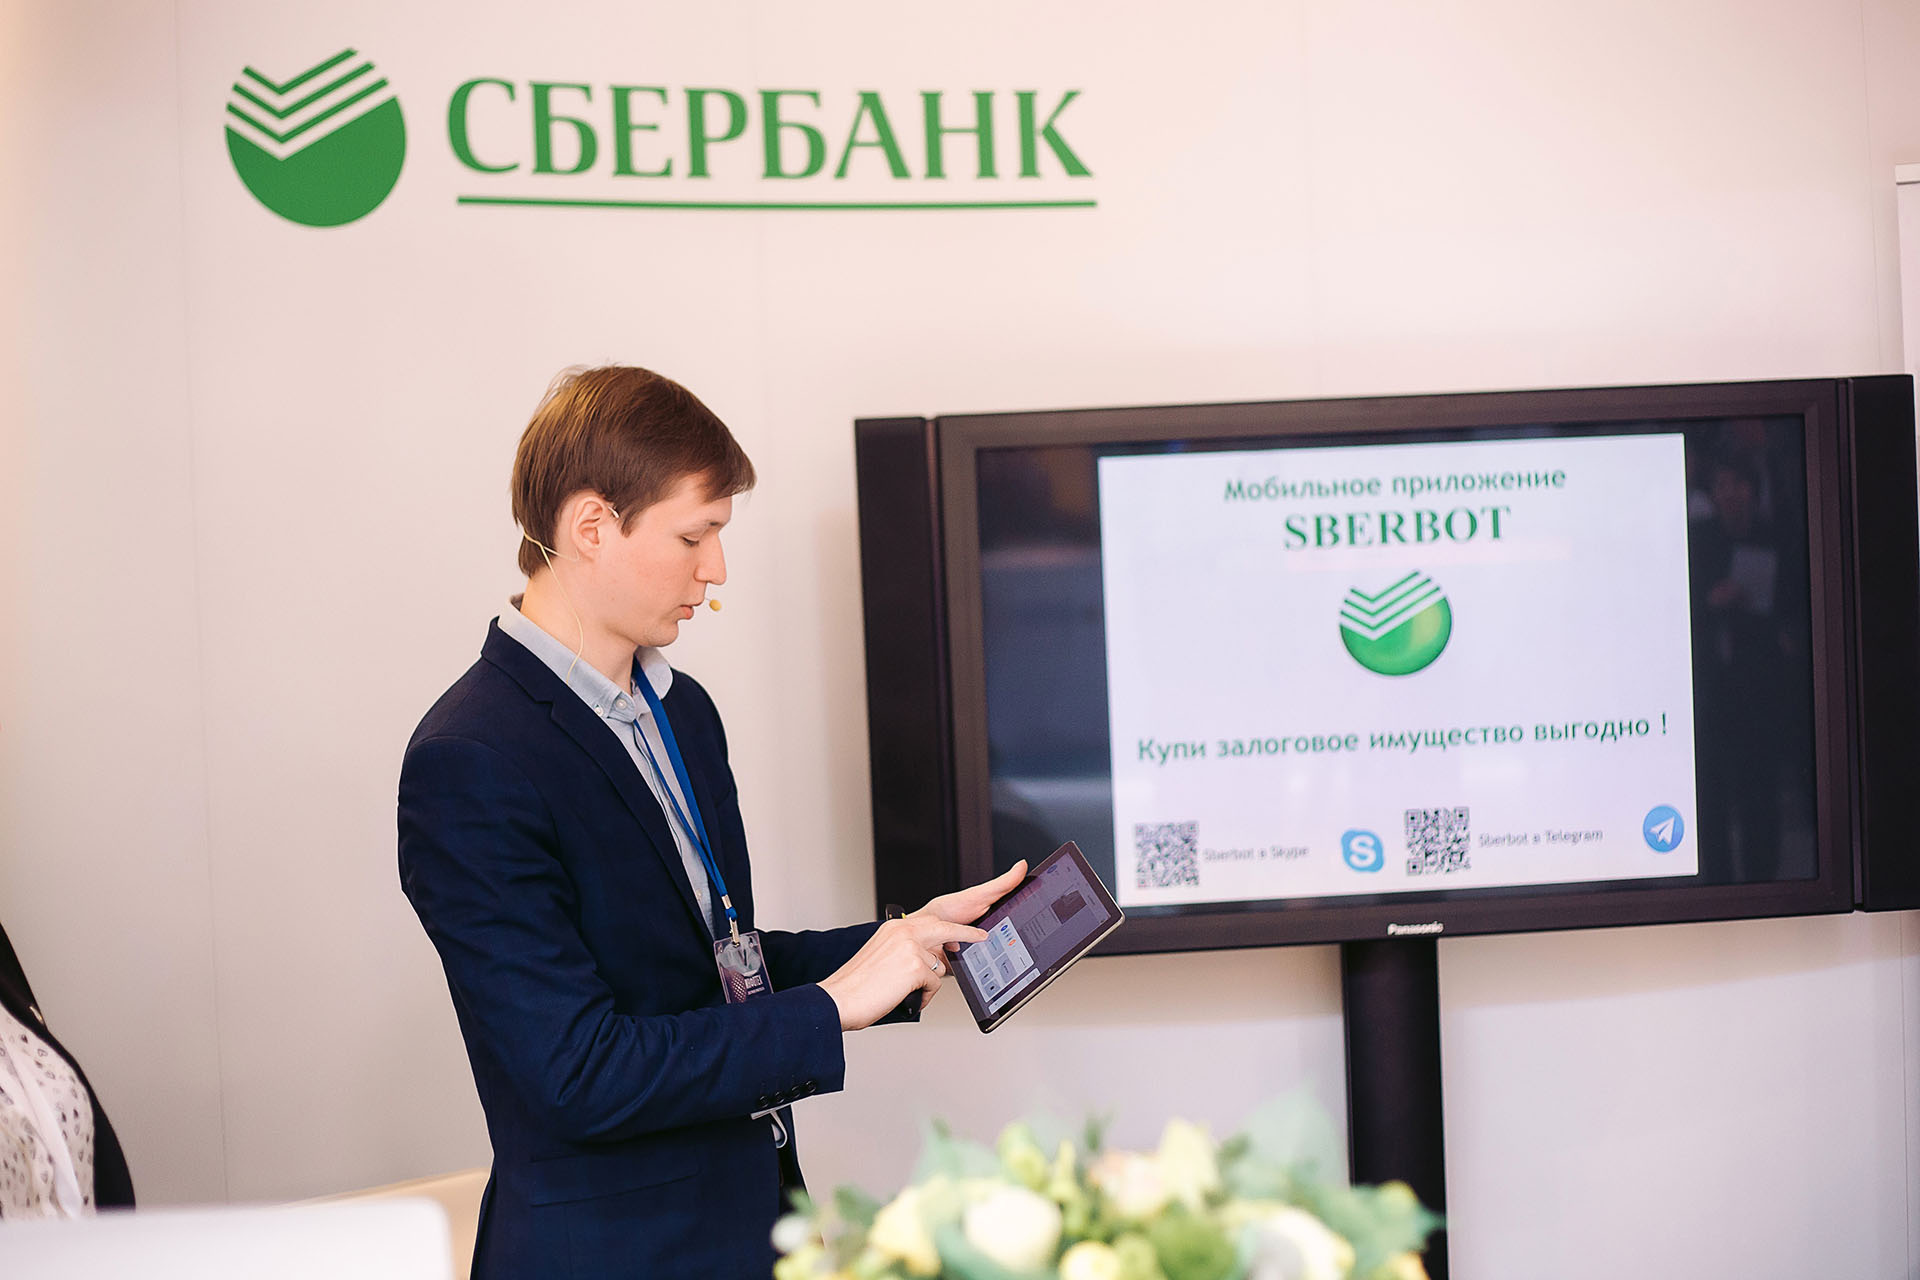 Sberbank service cc. Сбербанк сервис. Сервисы Сбера. Сбербанк Брис.